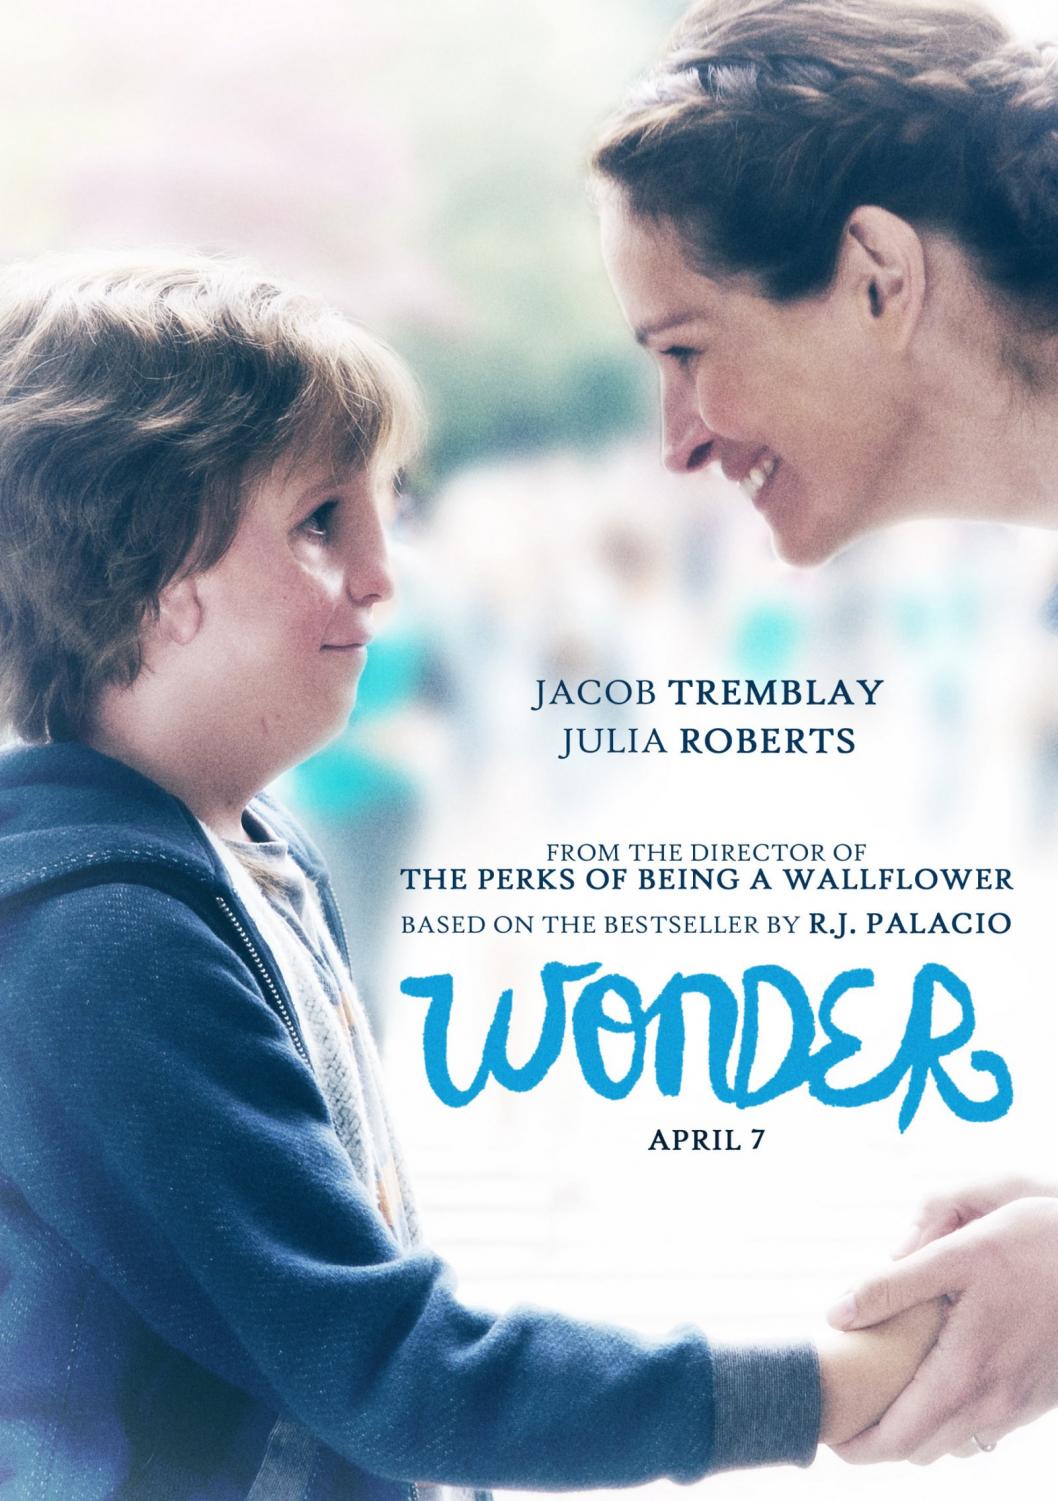 Full Movie Review of Wonder